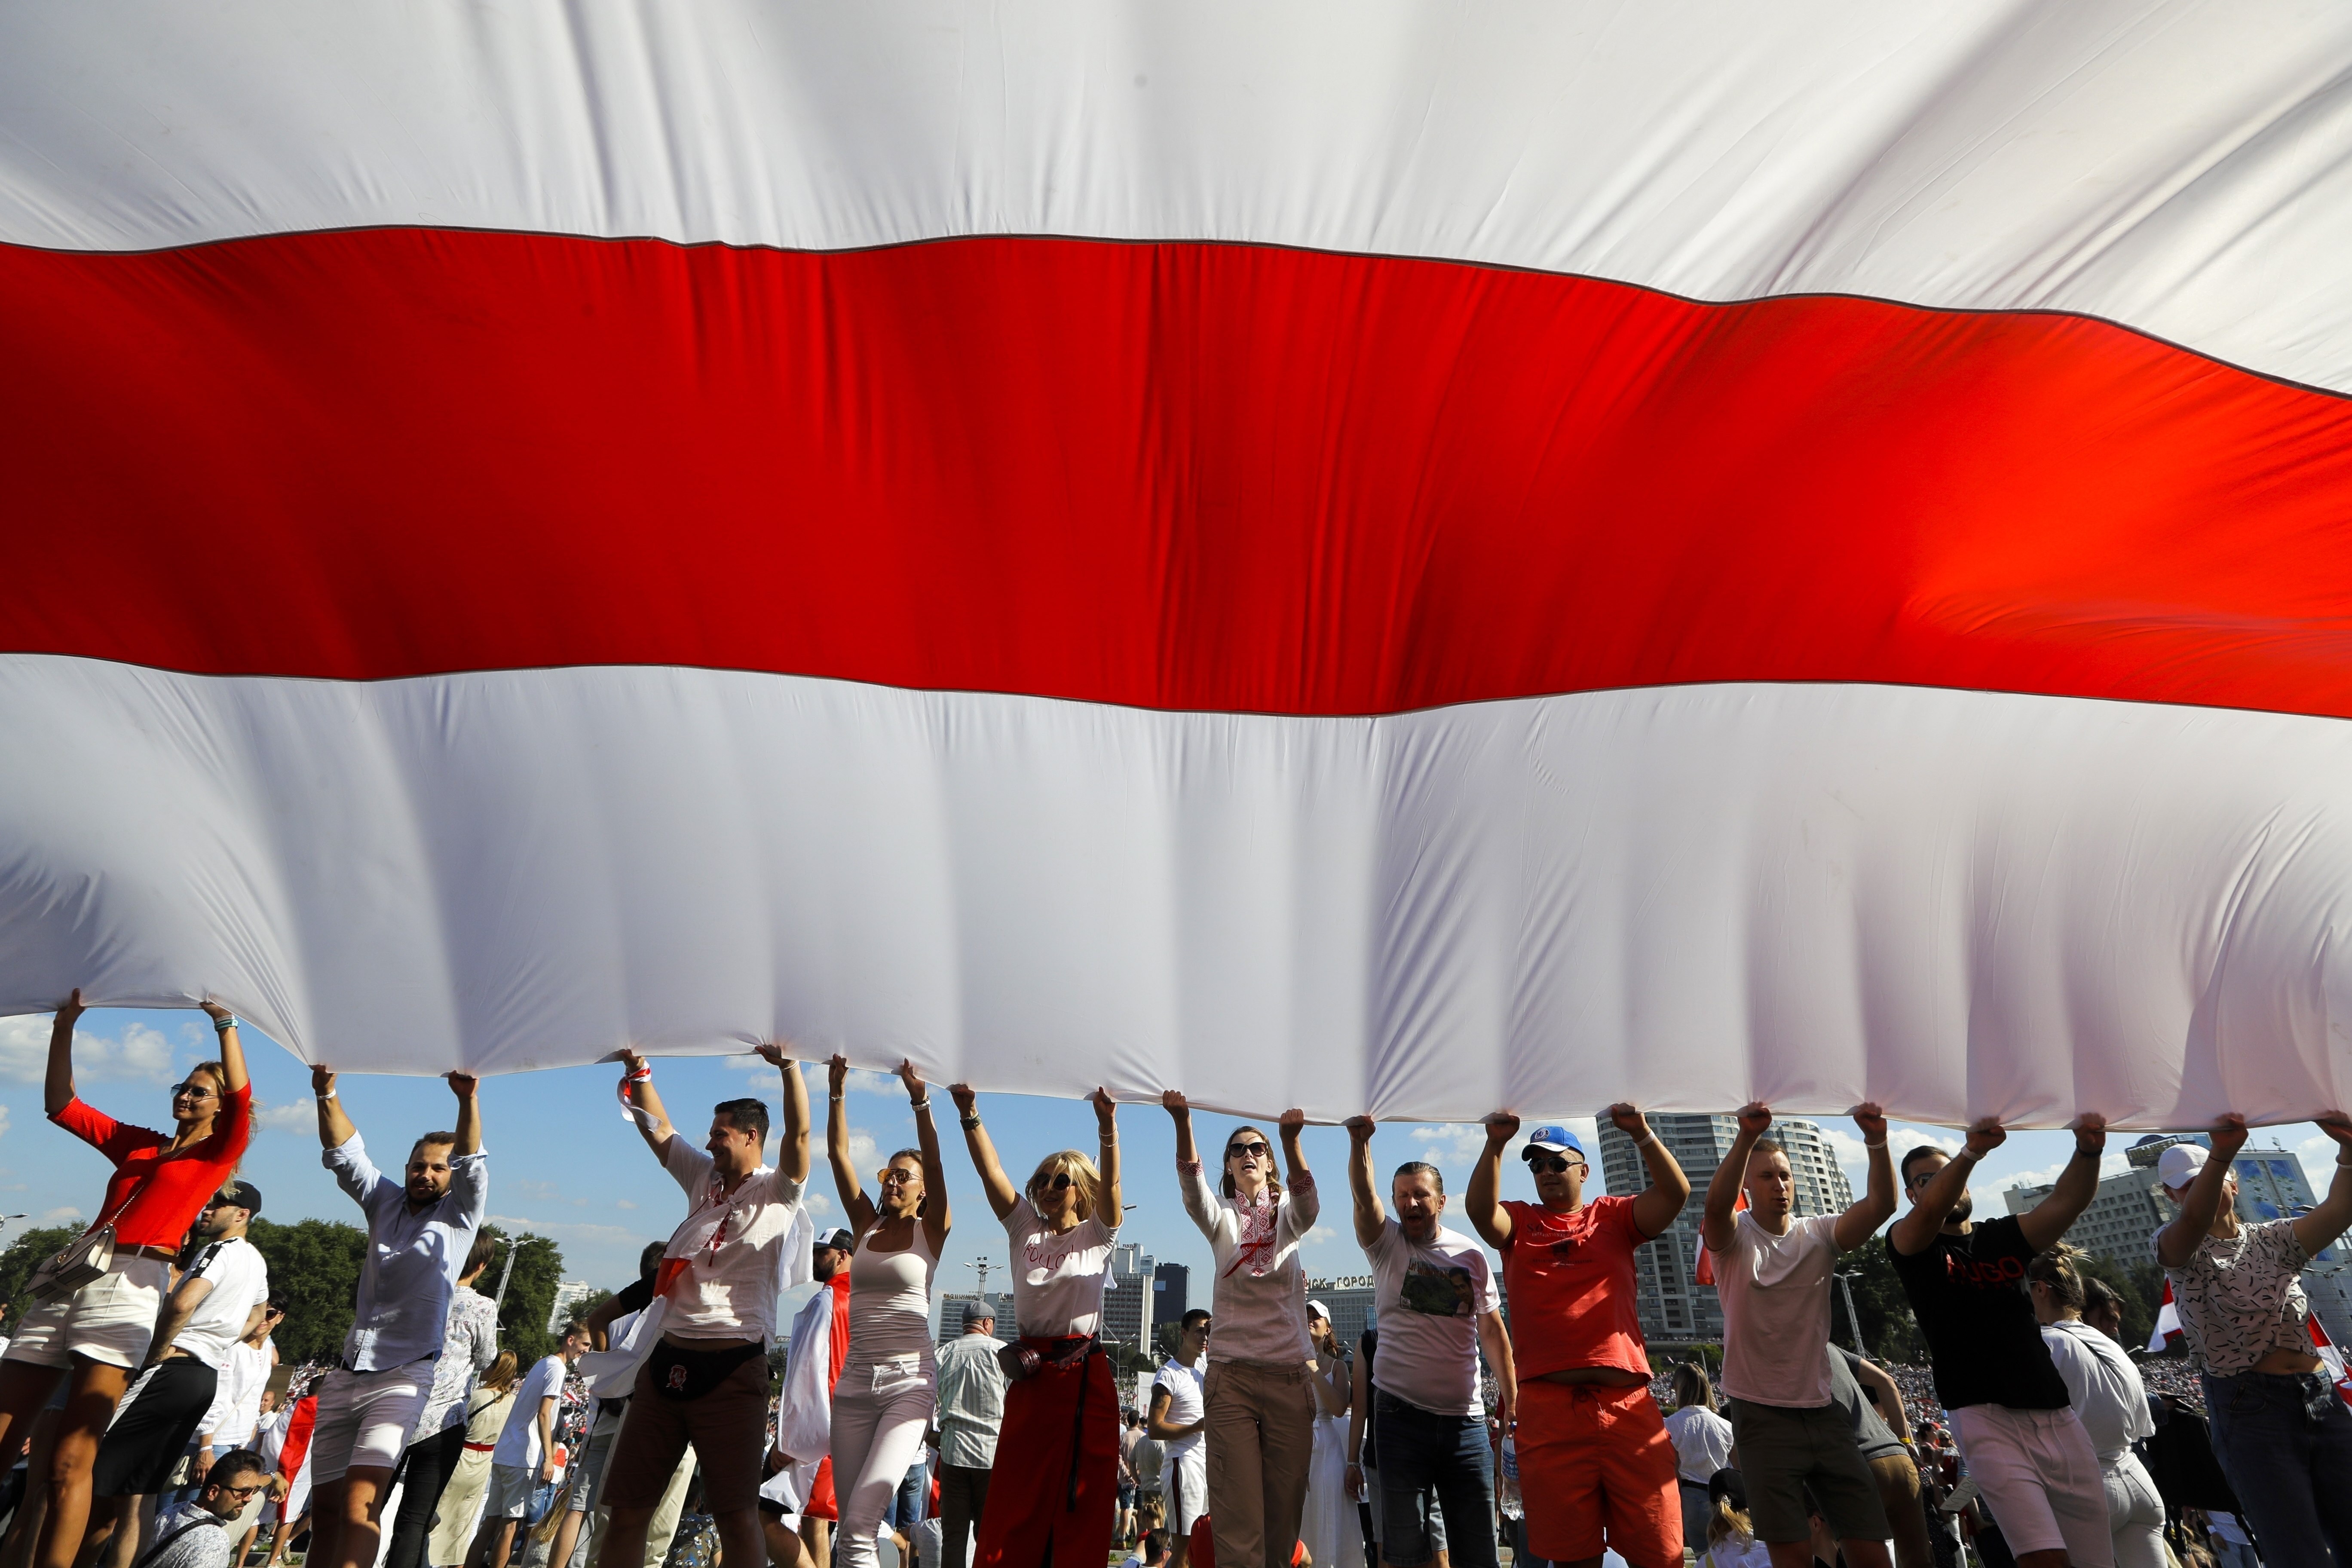 Бчб флаг это. БЧБ Белоруссия. Белорусский флаг БЧБ. Флаг белорусской оппозиции бело красно белый. Флаг белорусского протеста.